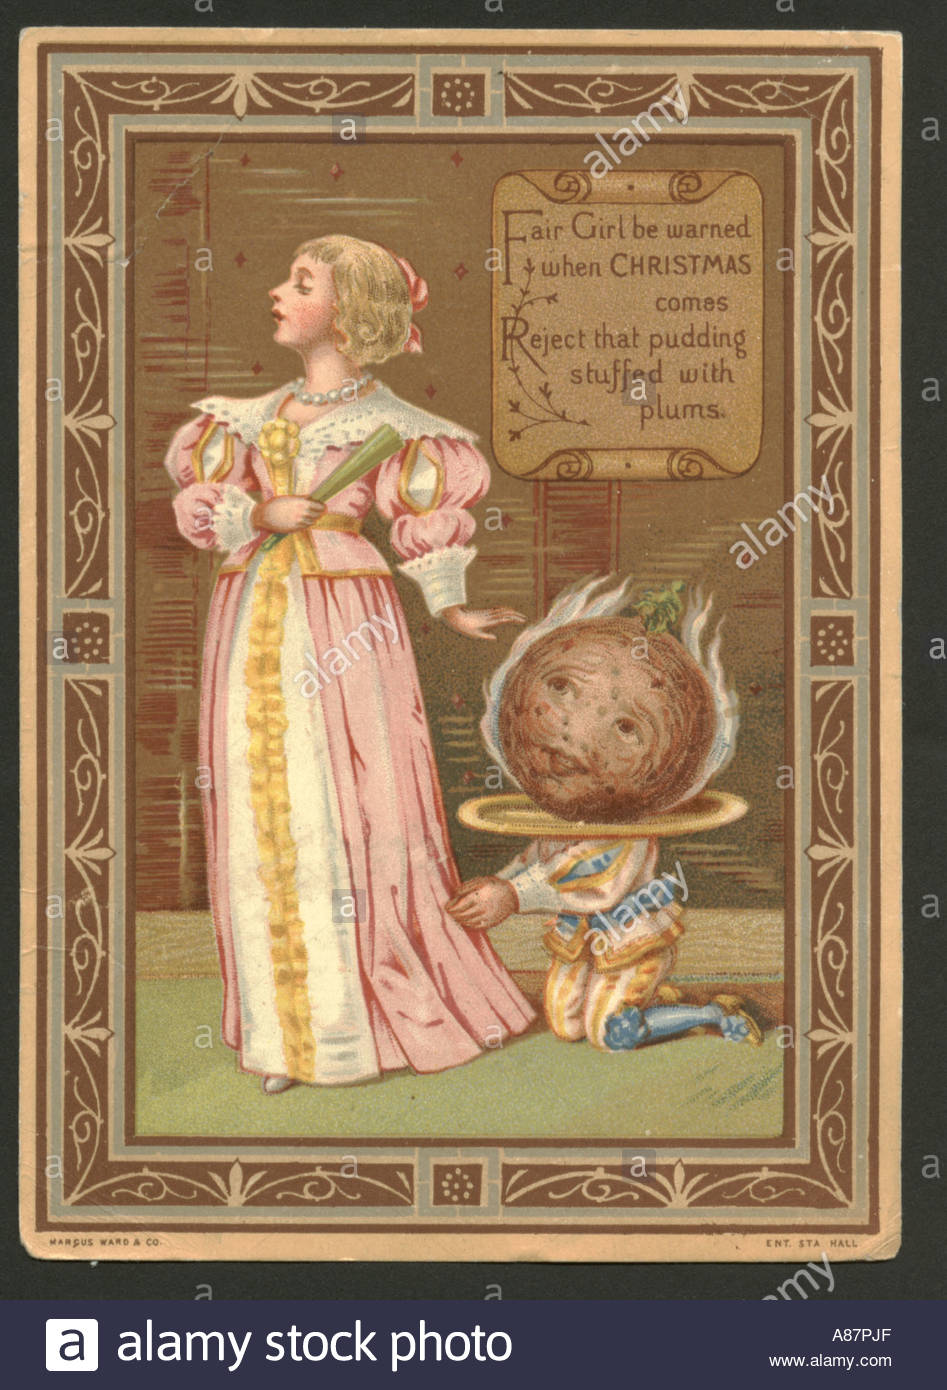 plum-pudding-anthropomorphic-christmas-greeting-card-circa-1875-A87PJF.jpg